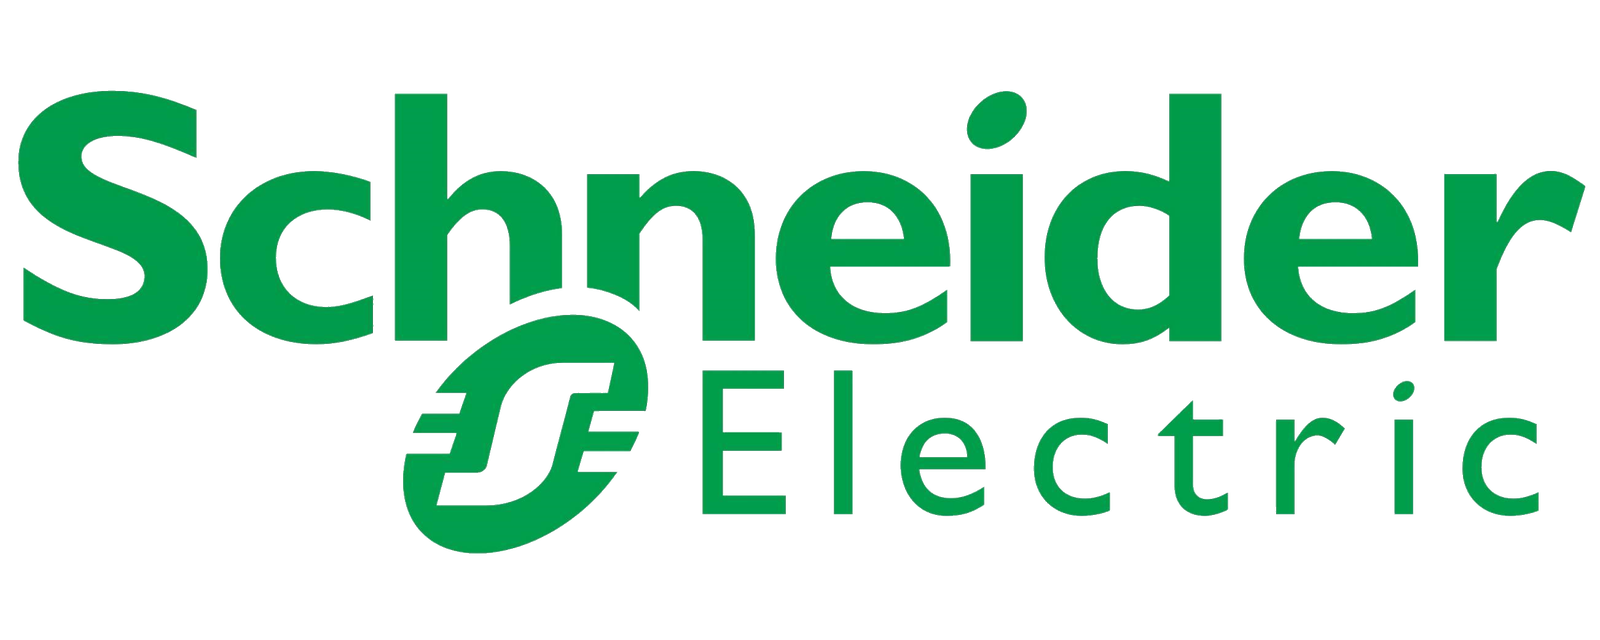 Schneider electric logo.png